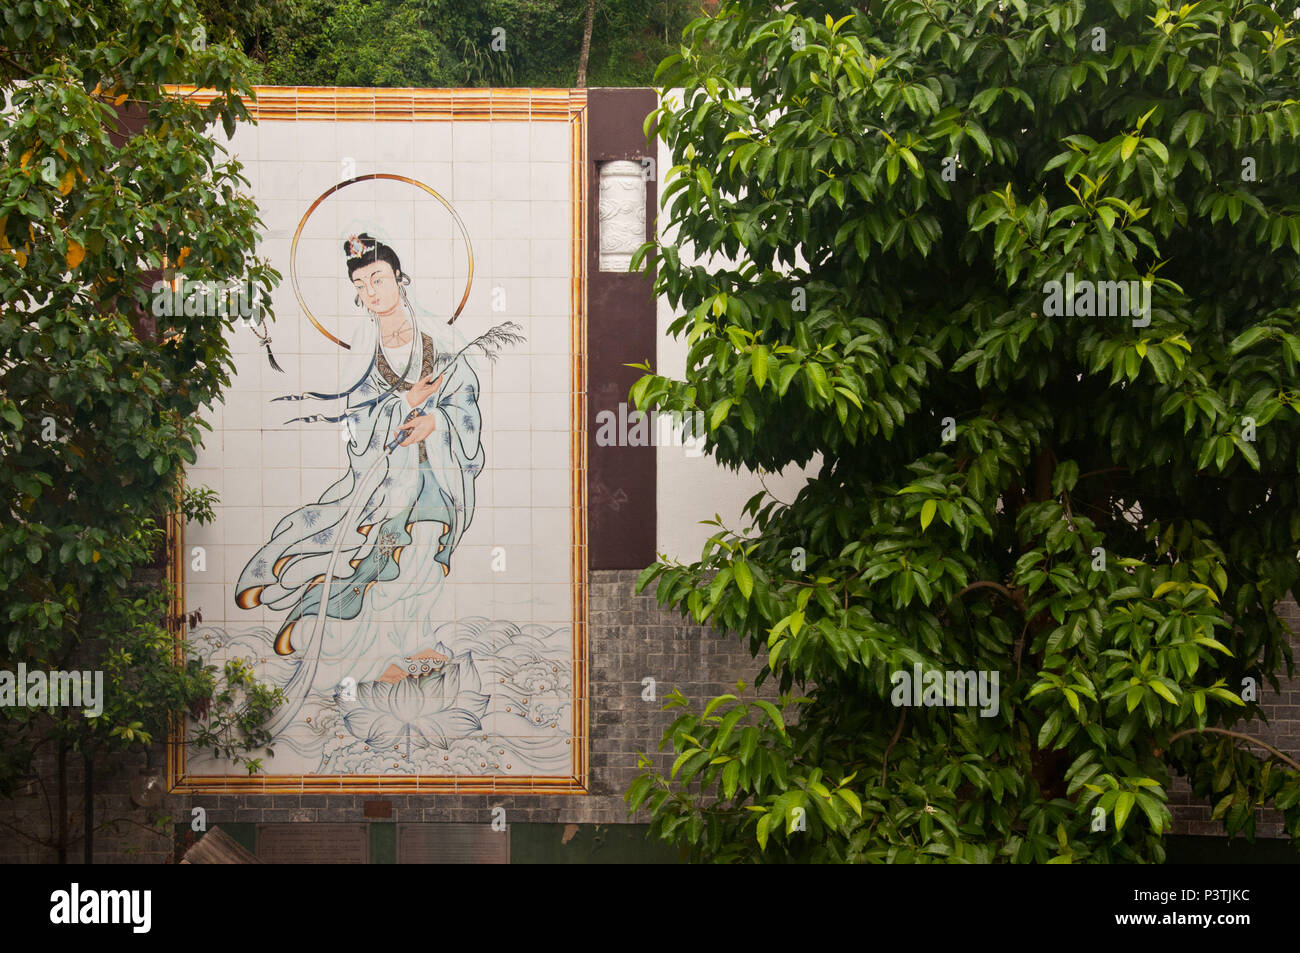 COTIA, SP - 21.02.2016: TEMPLO ZU LAI - Painel de azulejos no jardim do templo budista. (Foto: Daniela Maria / Fotoarena) Stock Photo